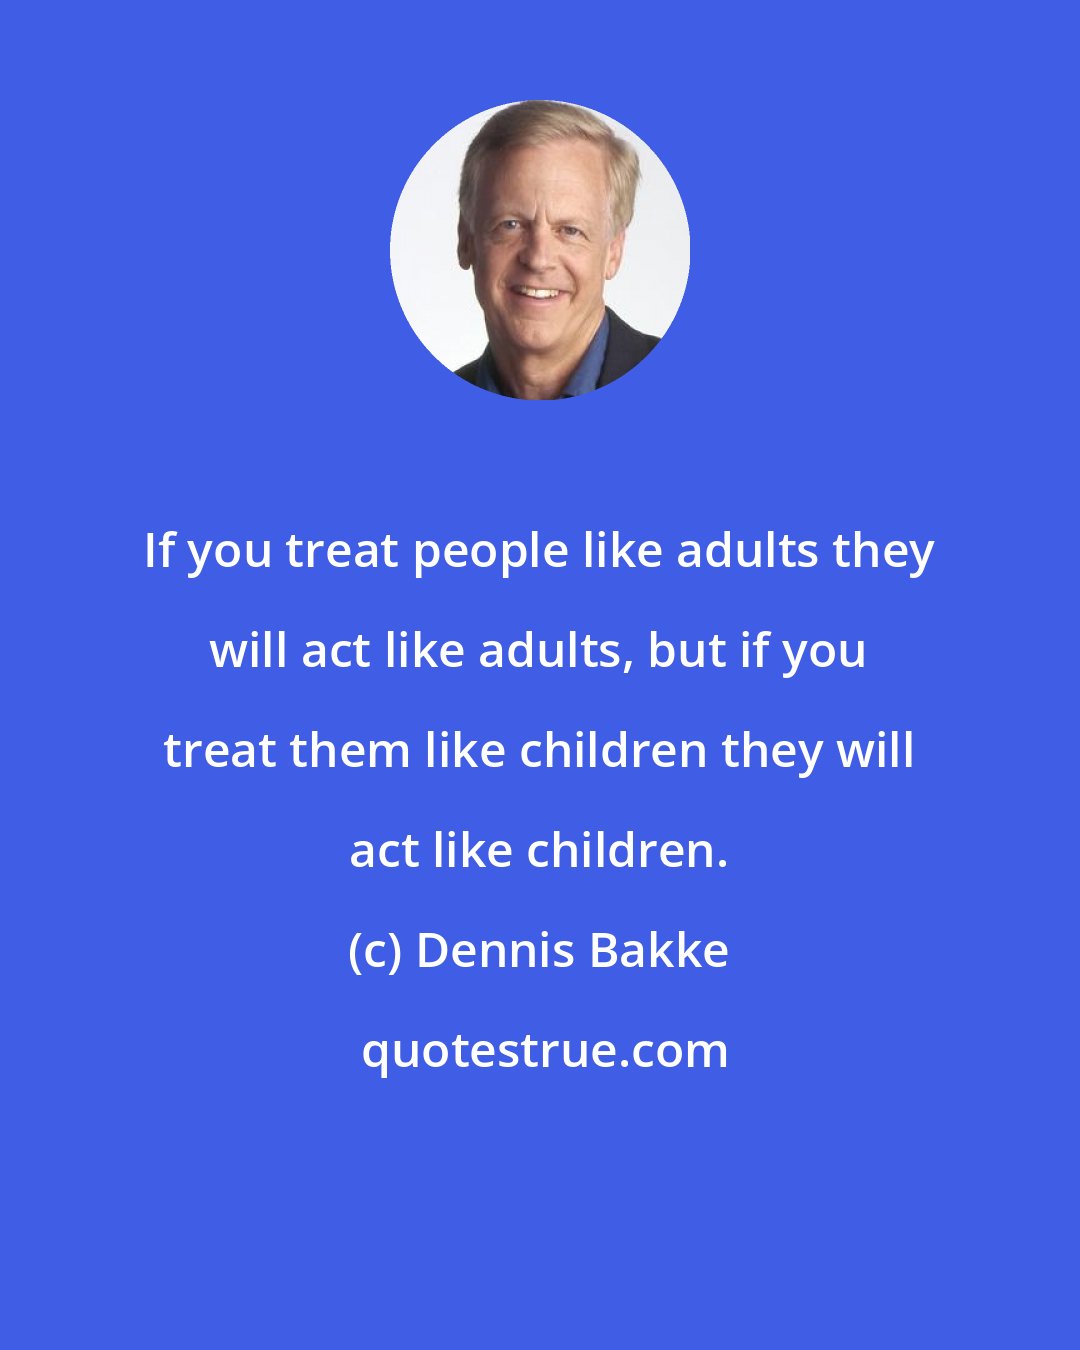 Dennis Bakke: If you treat people like adults they will act like adults, but if you treat them like children they will act like children.